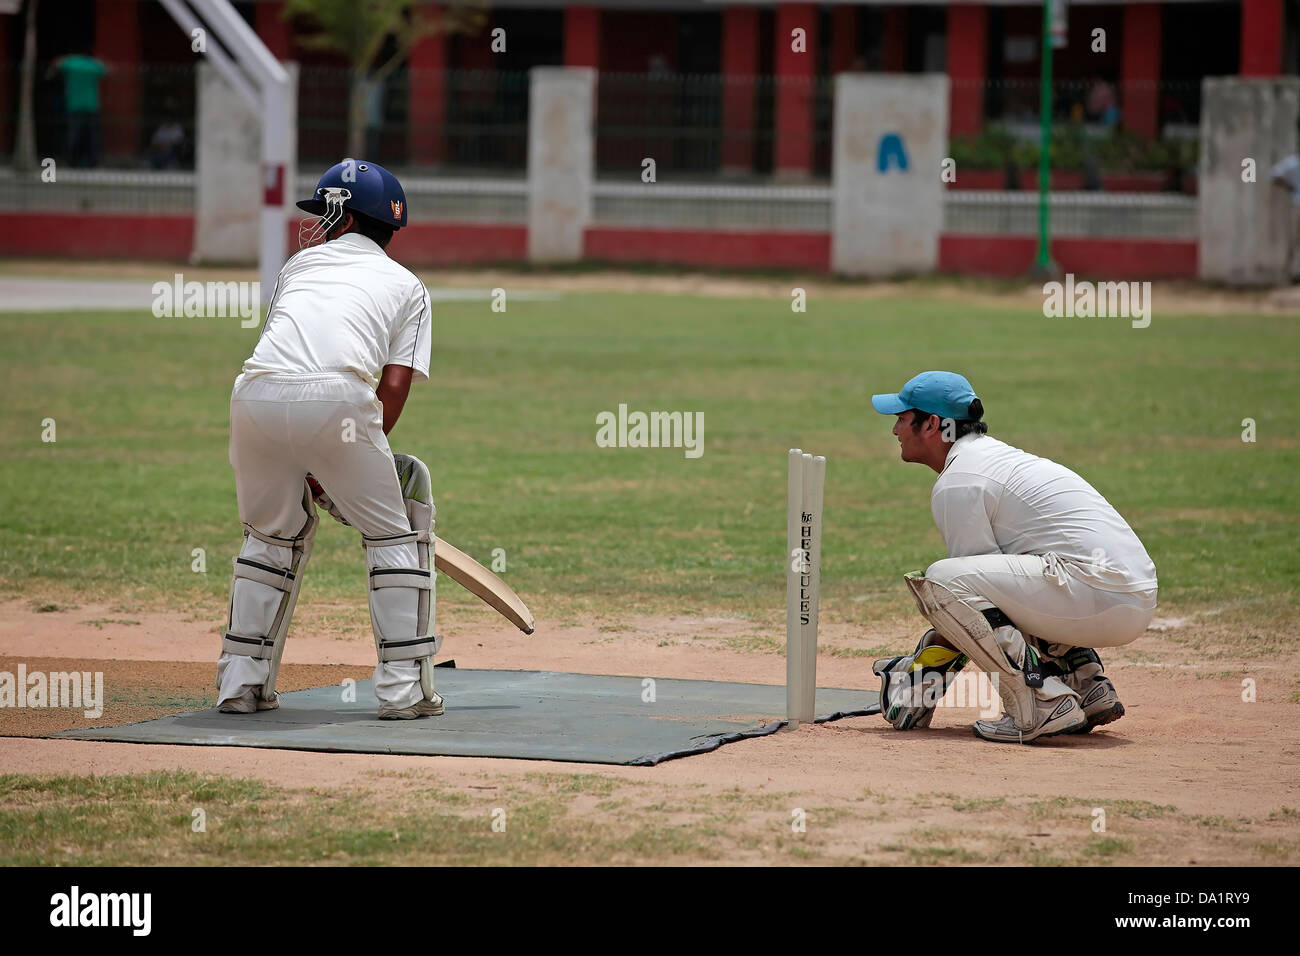 Batsman Hitting Ball During Cricket Match Stock Photo